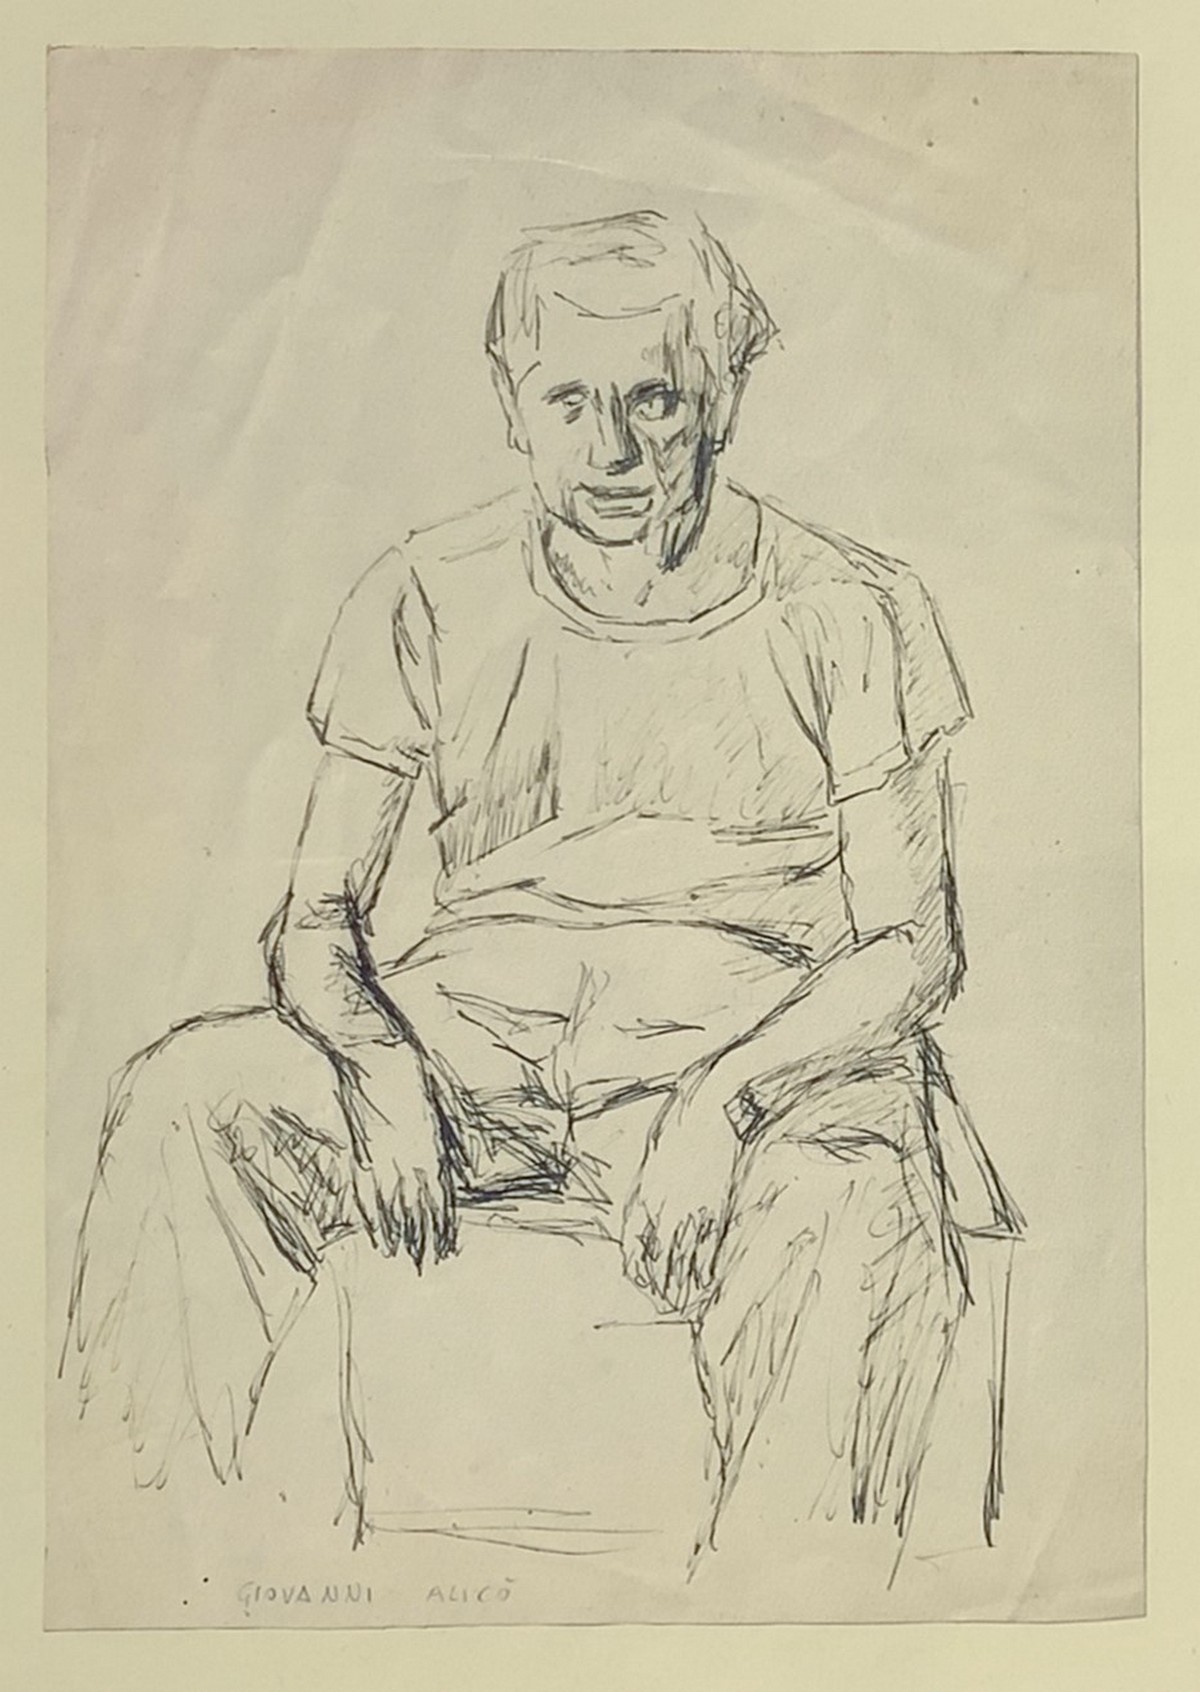 Alicò, Giovanni (Catania 1906-Milano 1971) - Sketch by Padron 'Ntoni